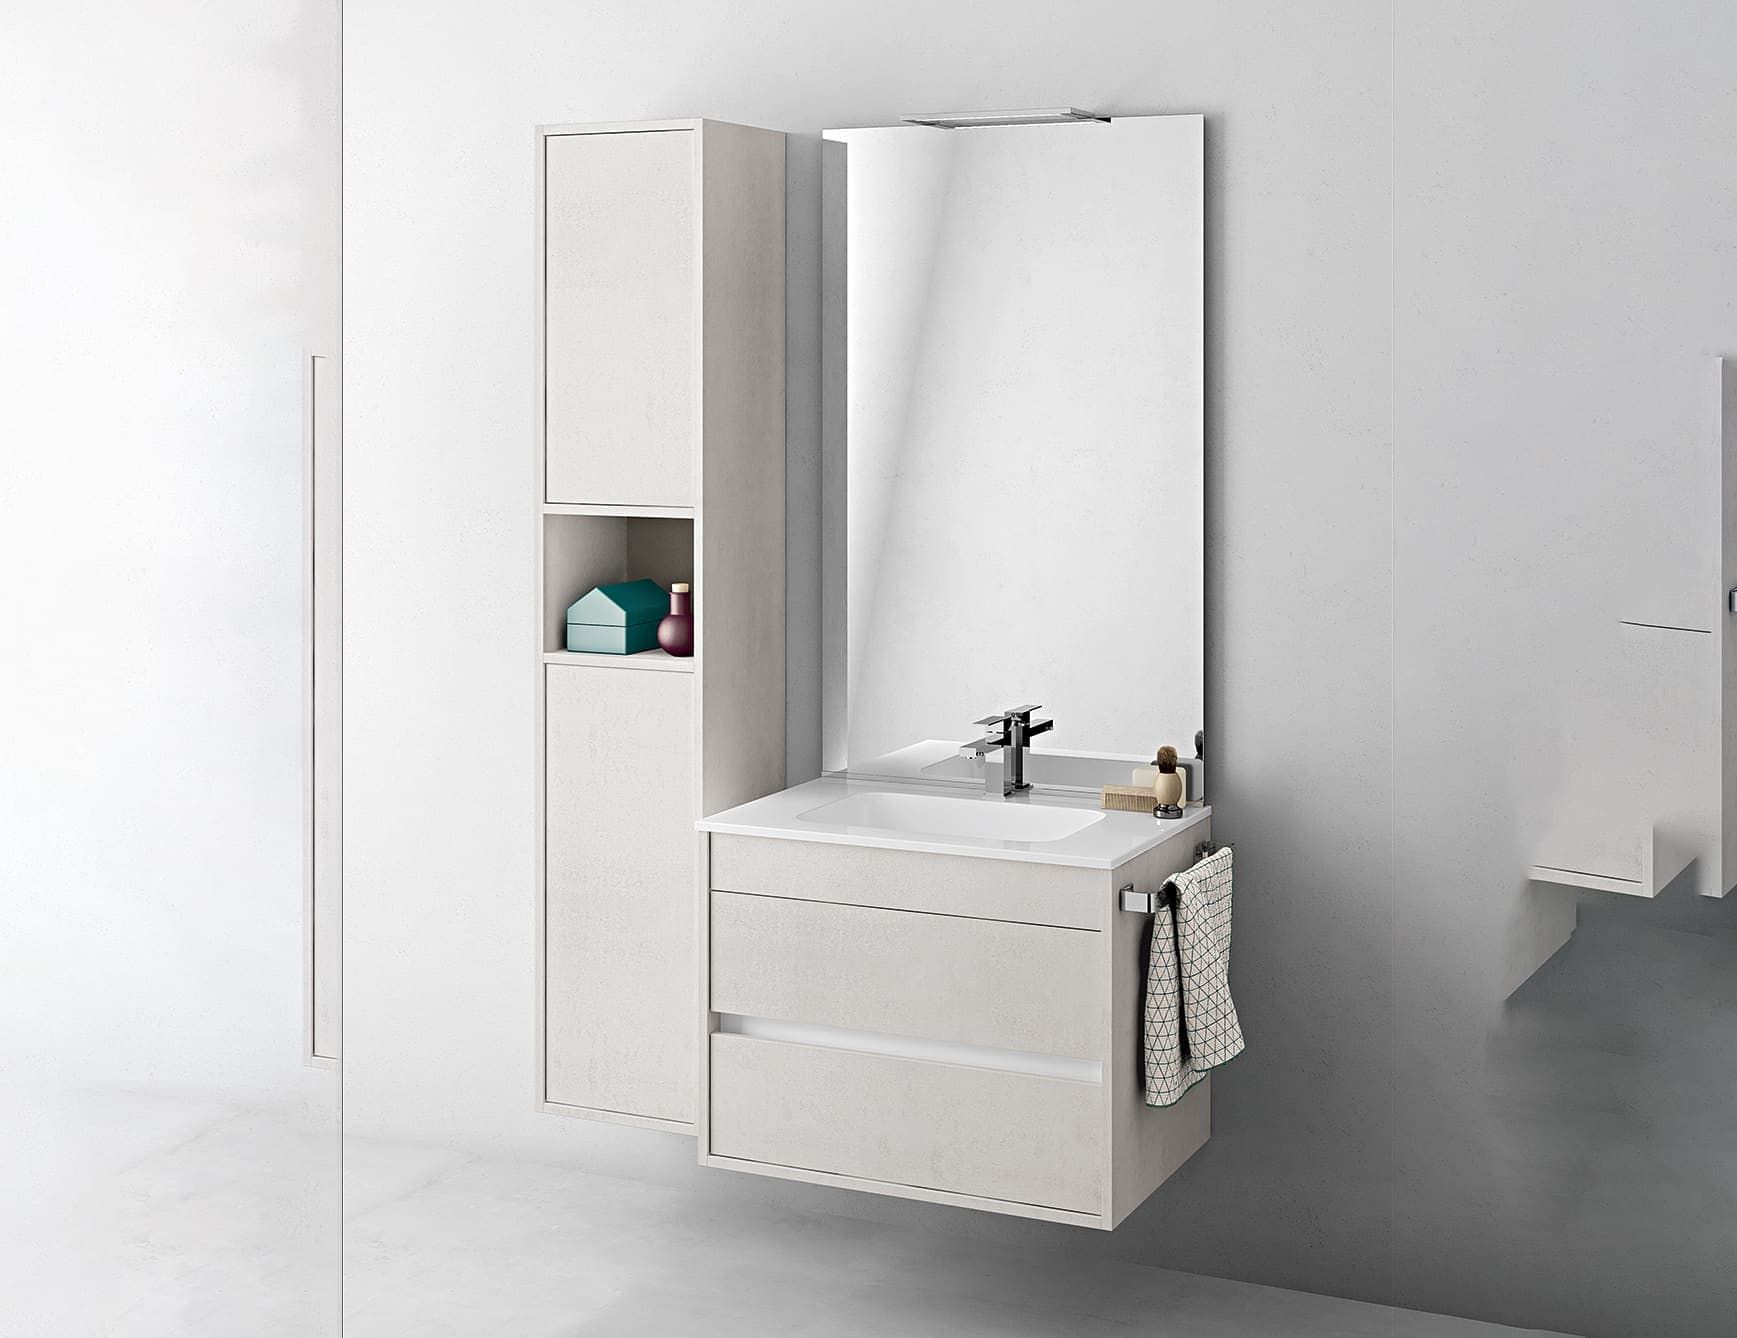 Duetto 06 modern Italian bathroom vanity with white grafite